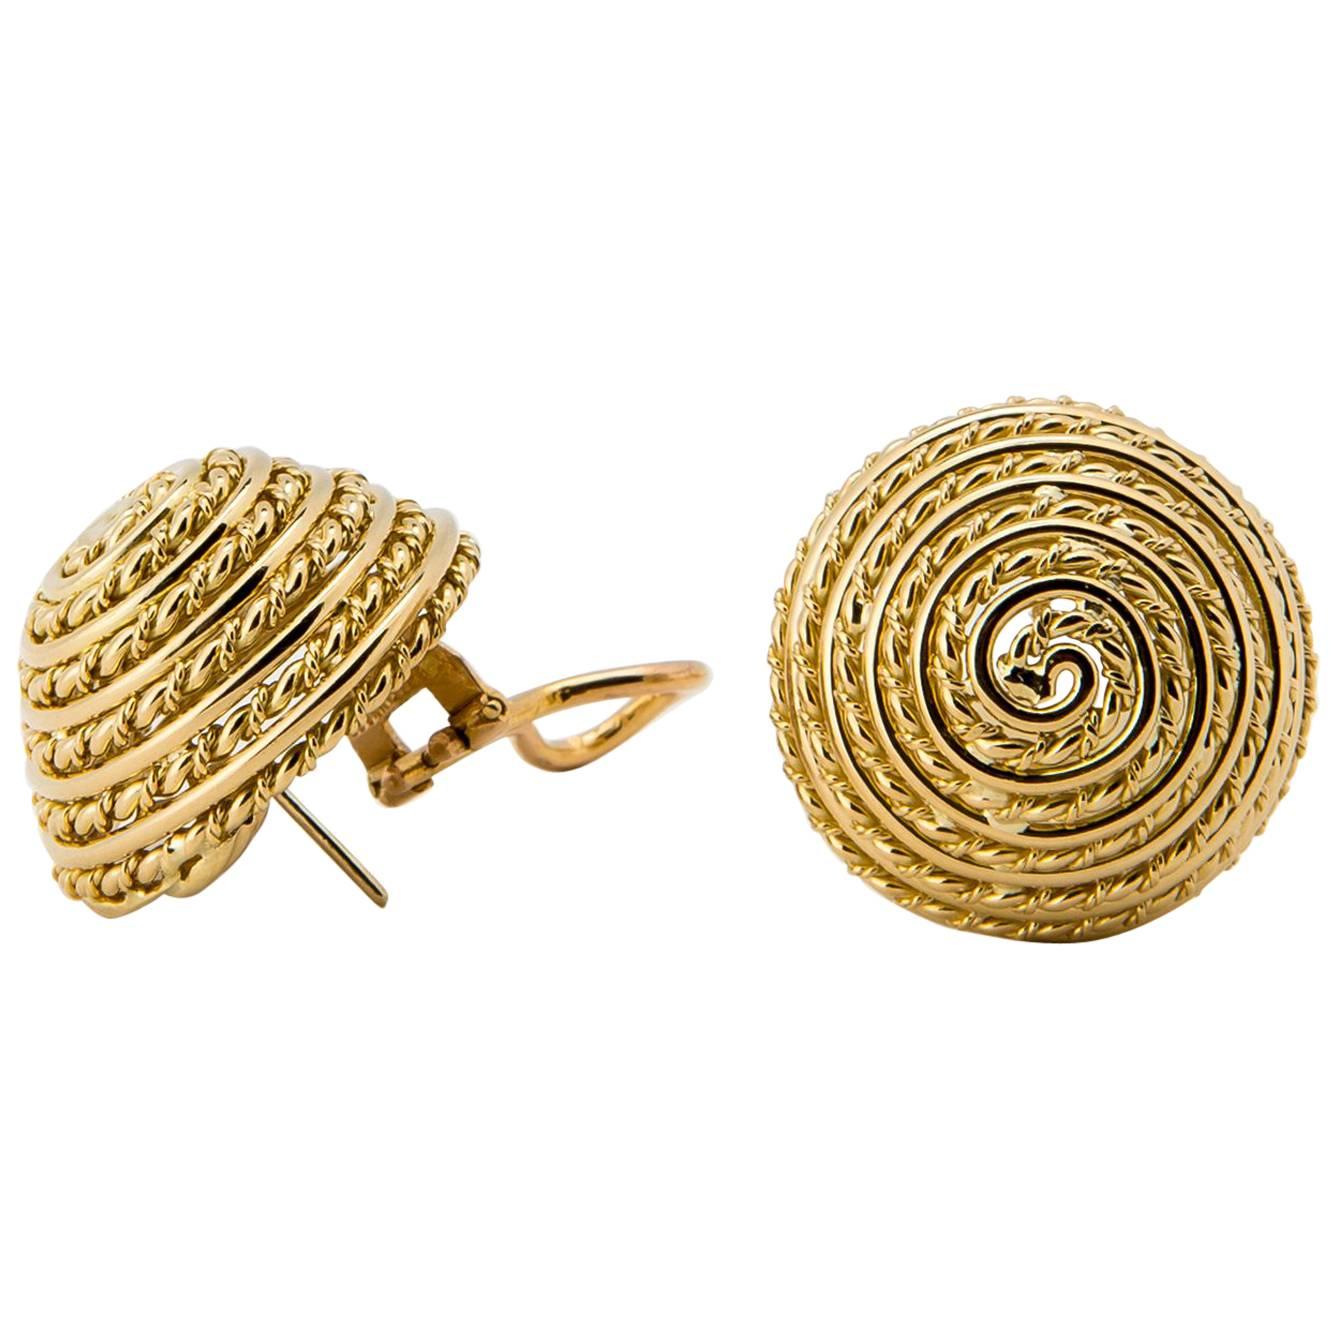 Tiffany & Co. Gold Dome Earrings